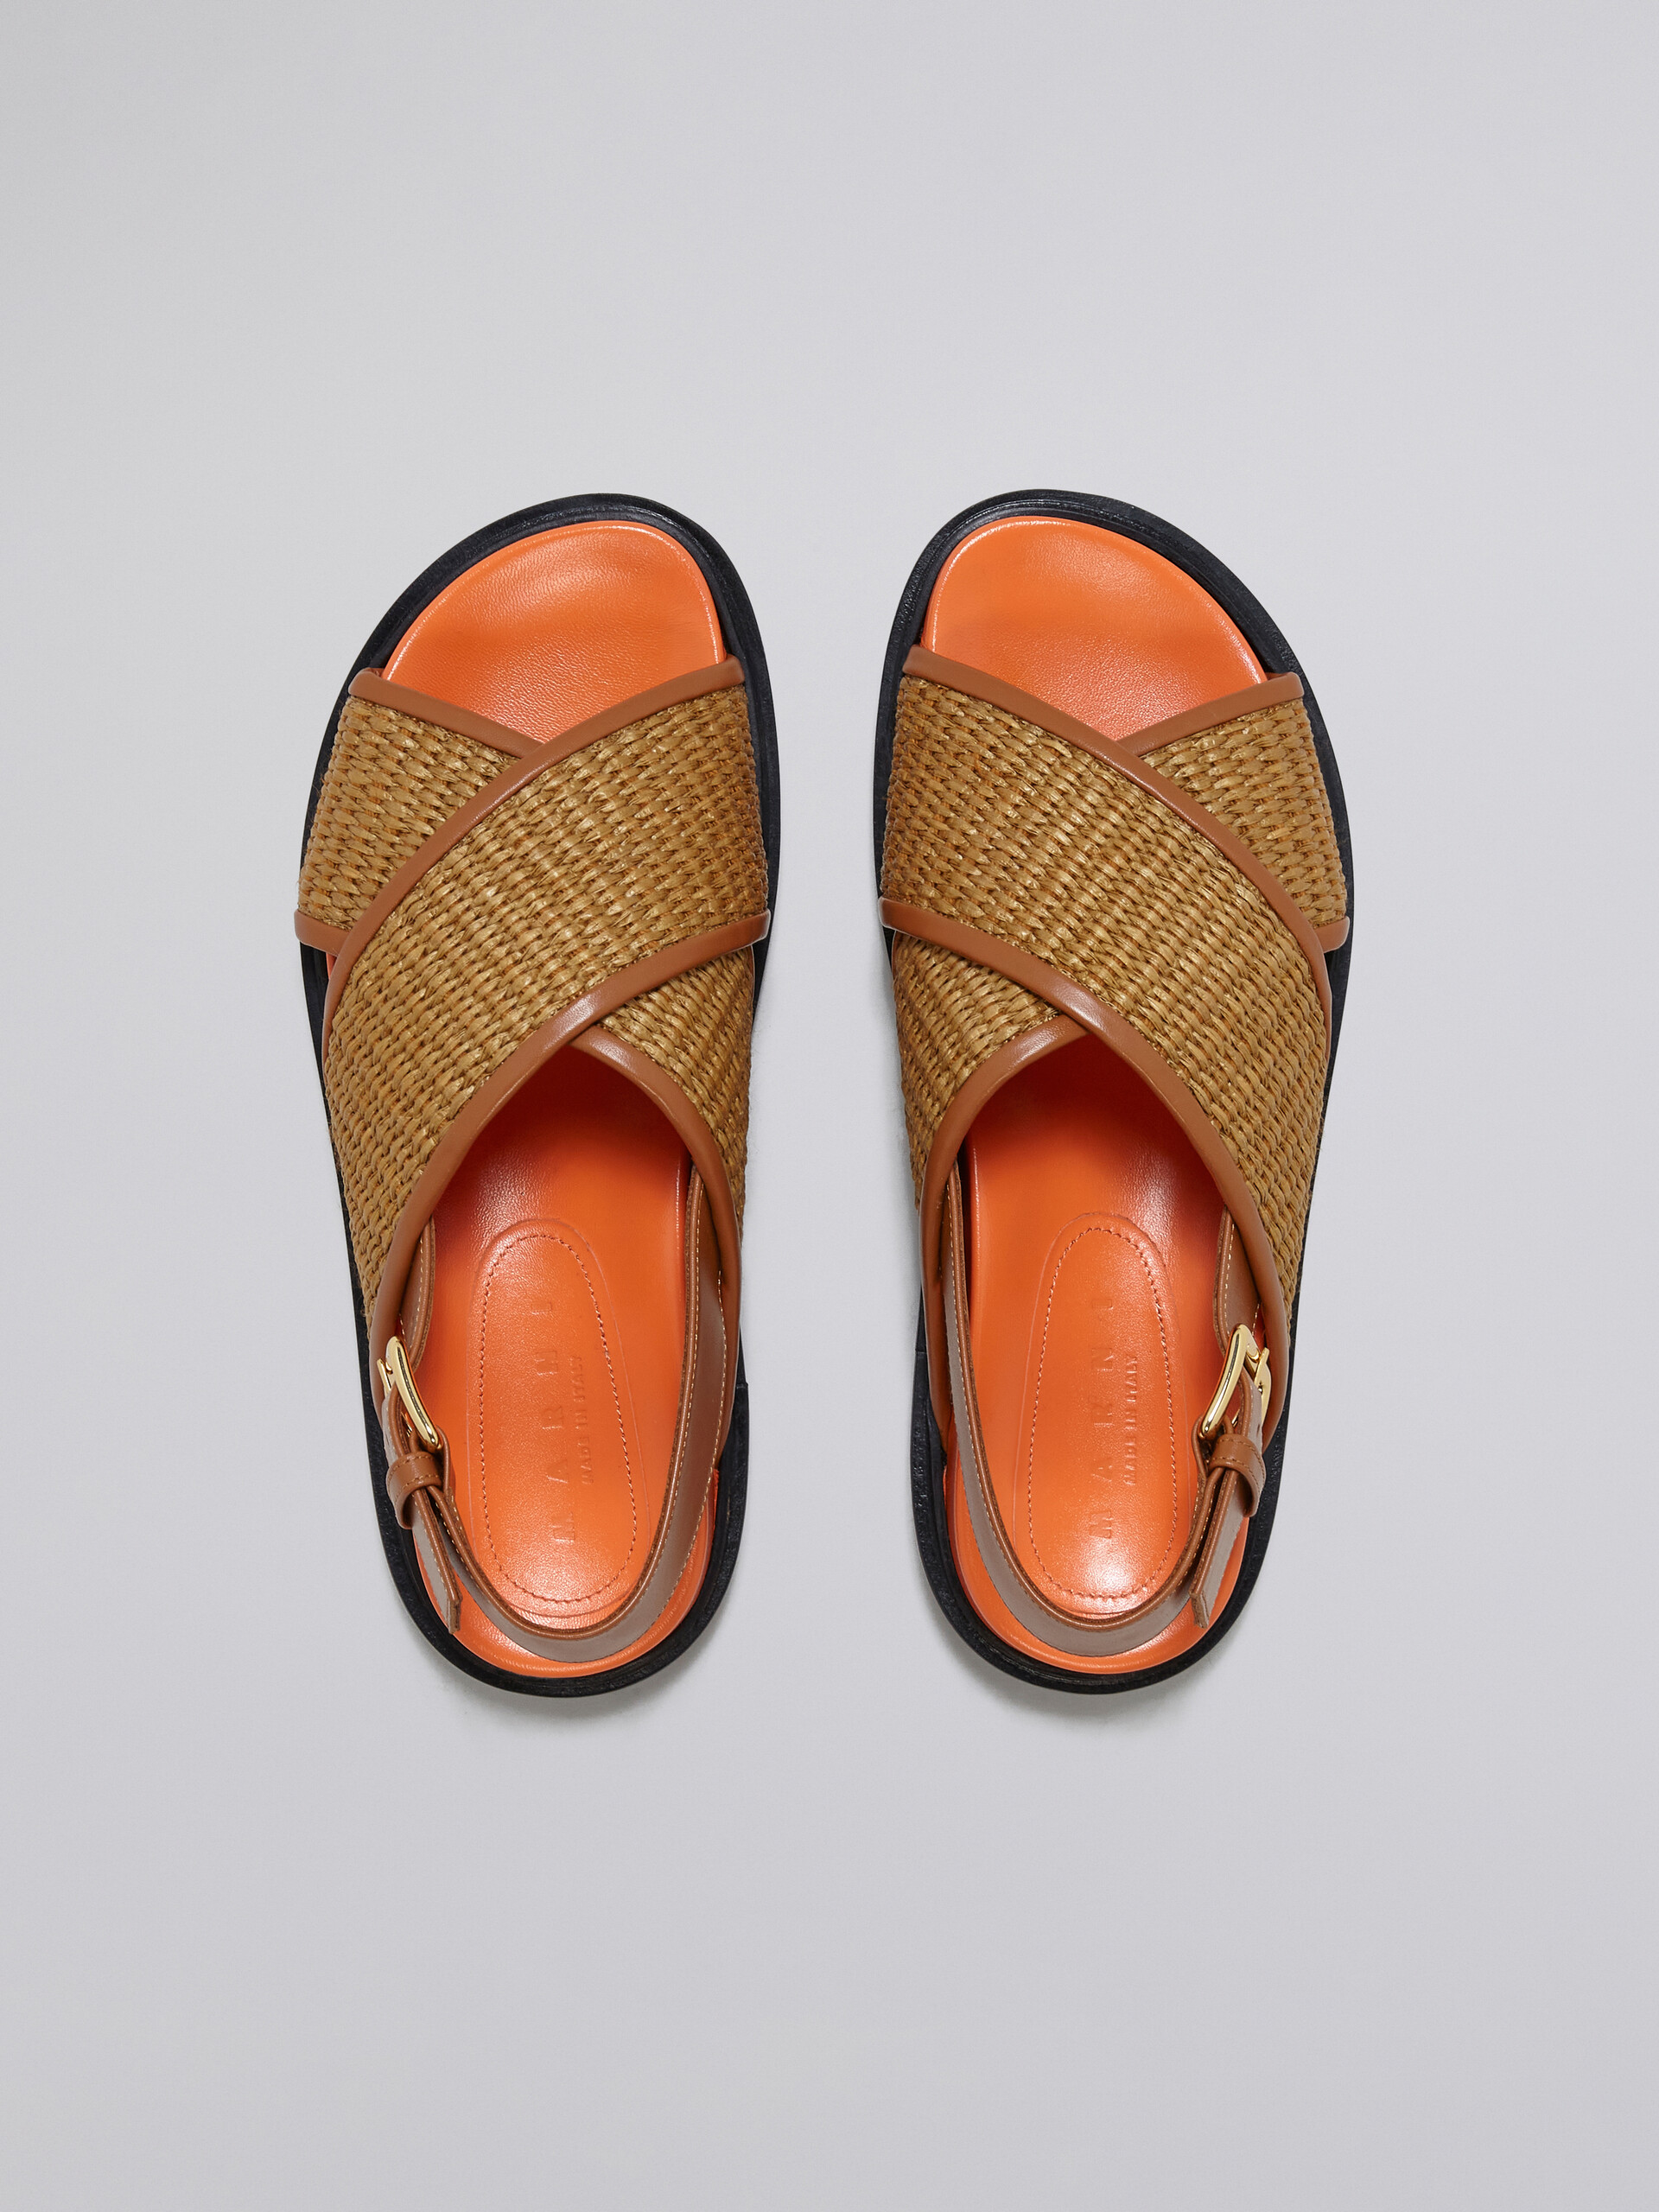 Sandales Fussbett en tissu effet raphia et cuir marron - Sandales - Image 4